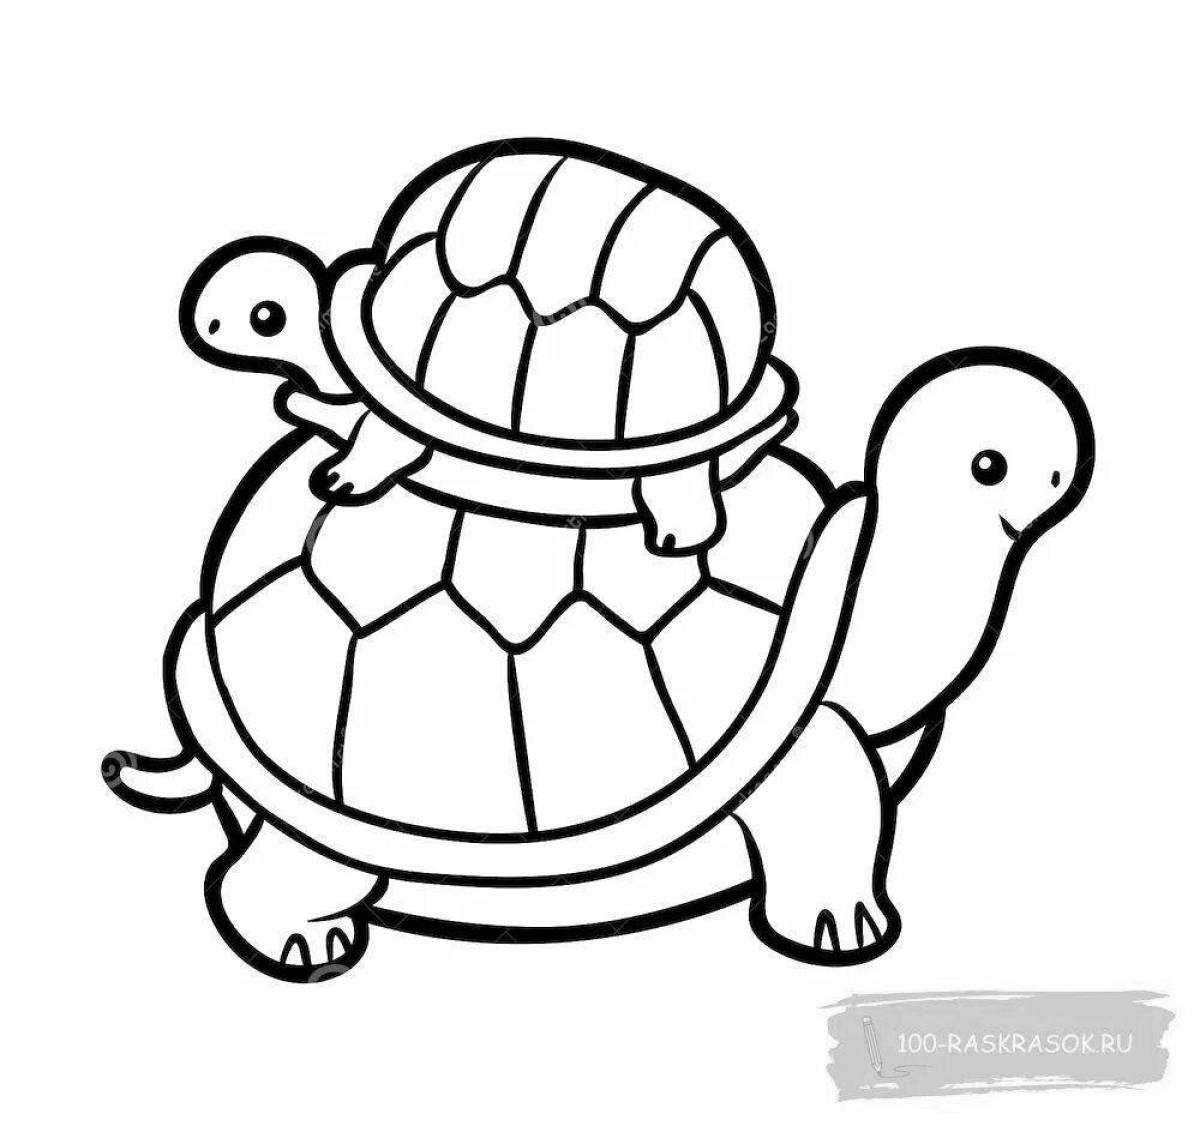 Coloring book glowing cute turtle